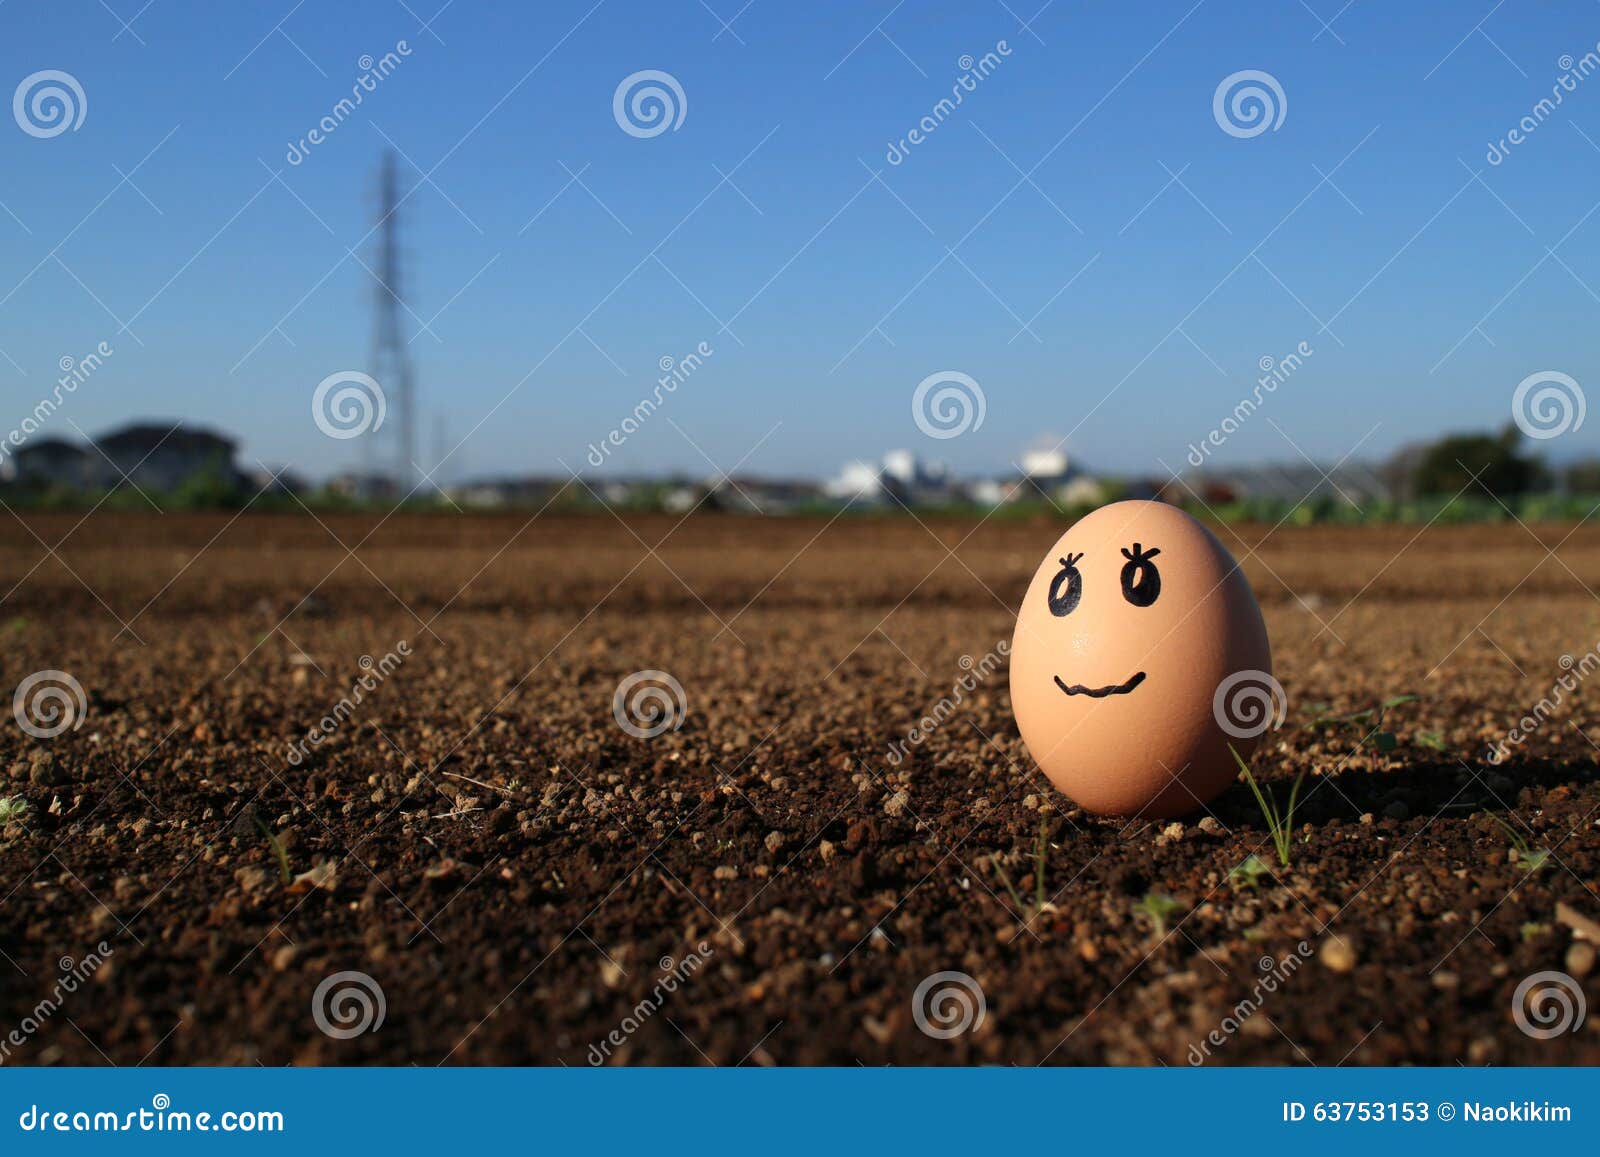 https://thumbs.dreamstime.com/z/thinking-egg-standing-soil-field-brown-63753153.jpg